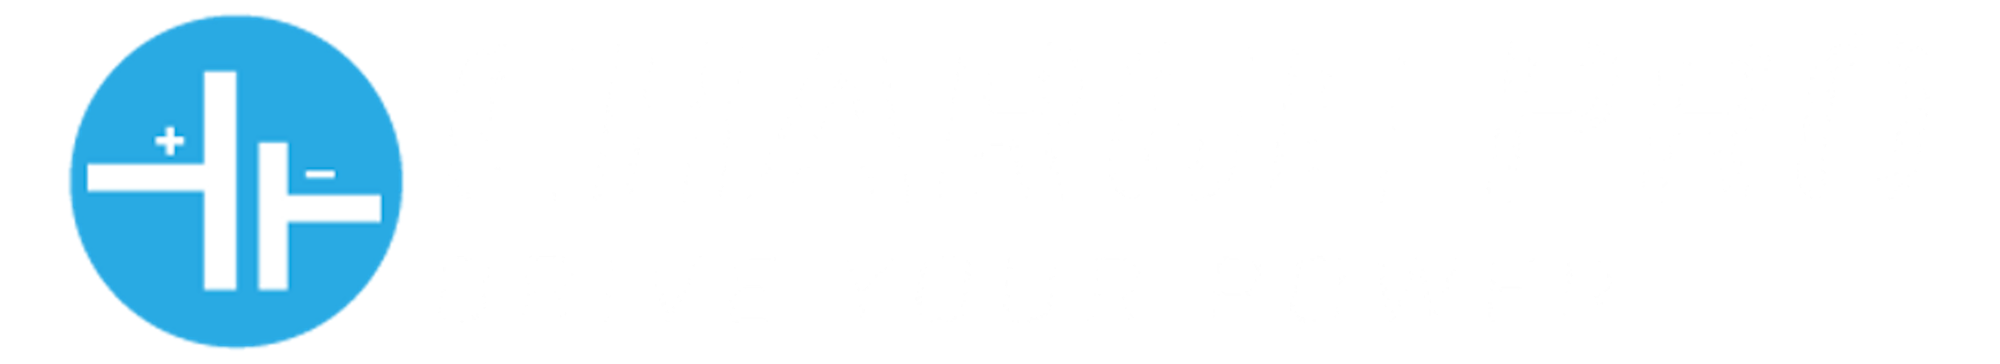 Charge Pro Texas logo